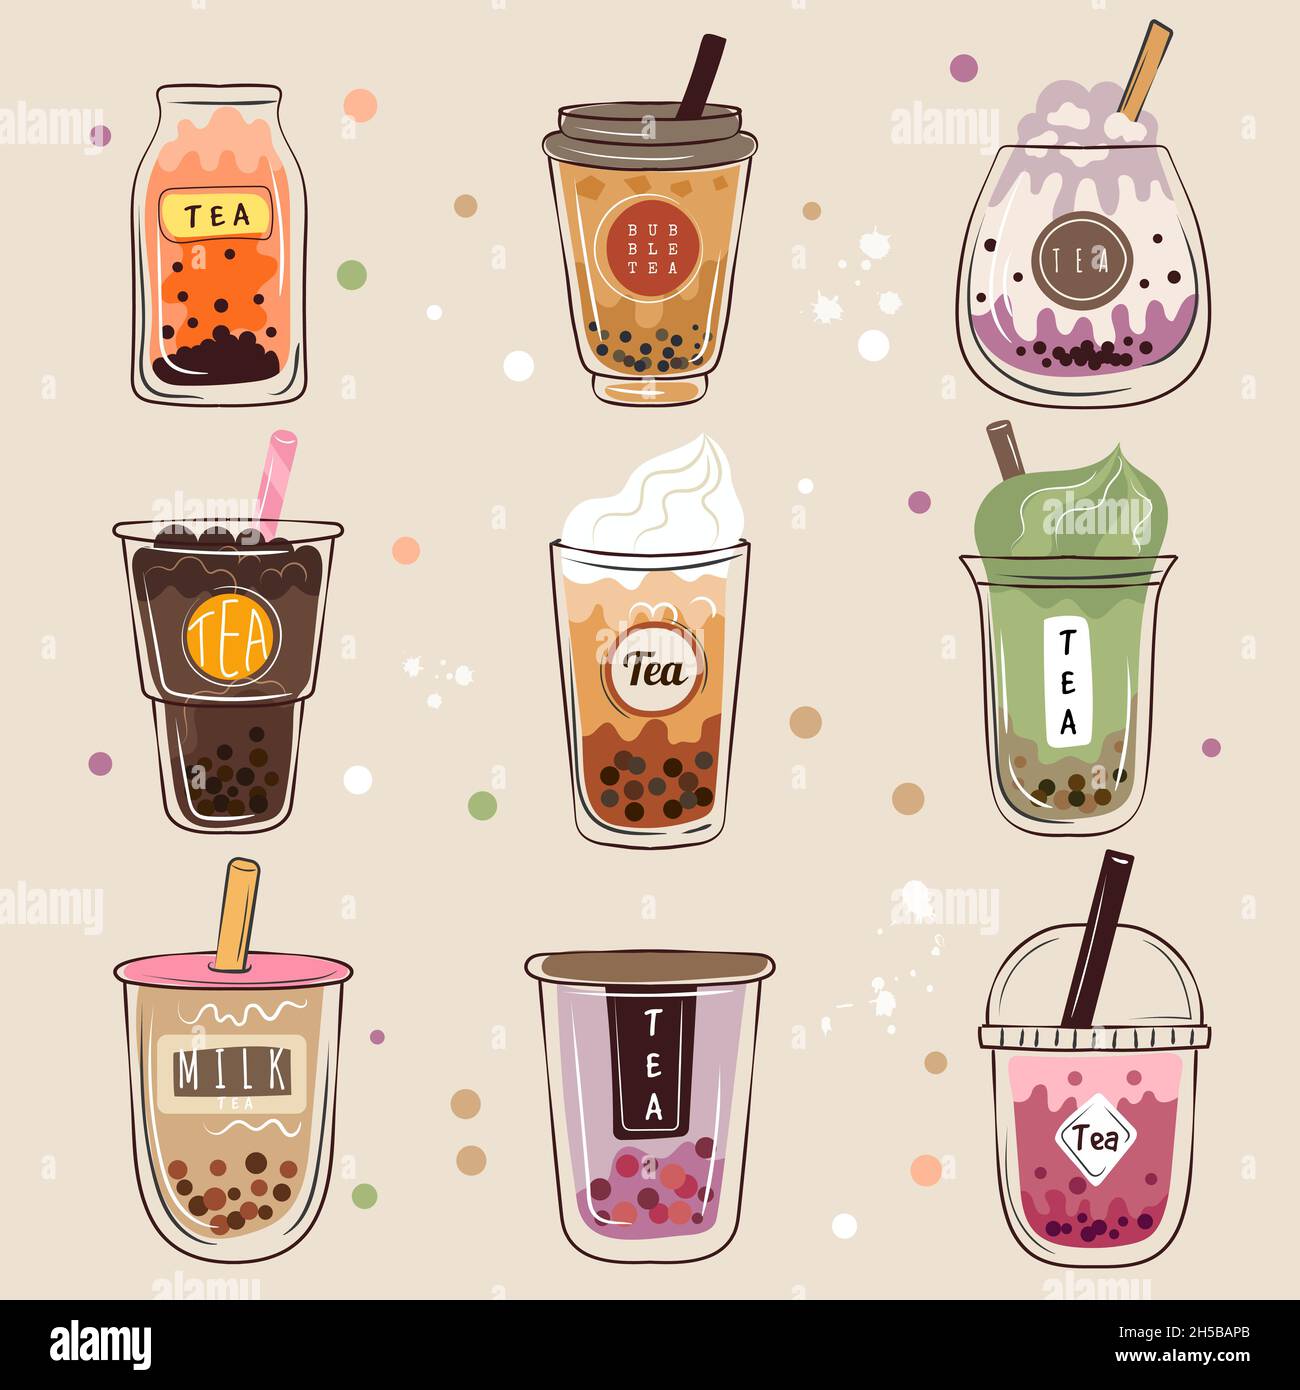 https://c8.alamy.com/comp/2H5BAPB/bubble-tea-asian-traditional-drink-milkshake-cup-drinking-dessert-in-plastic-glasses-vector-doodle-illustrations-2H5BAPB.jpg